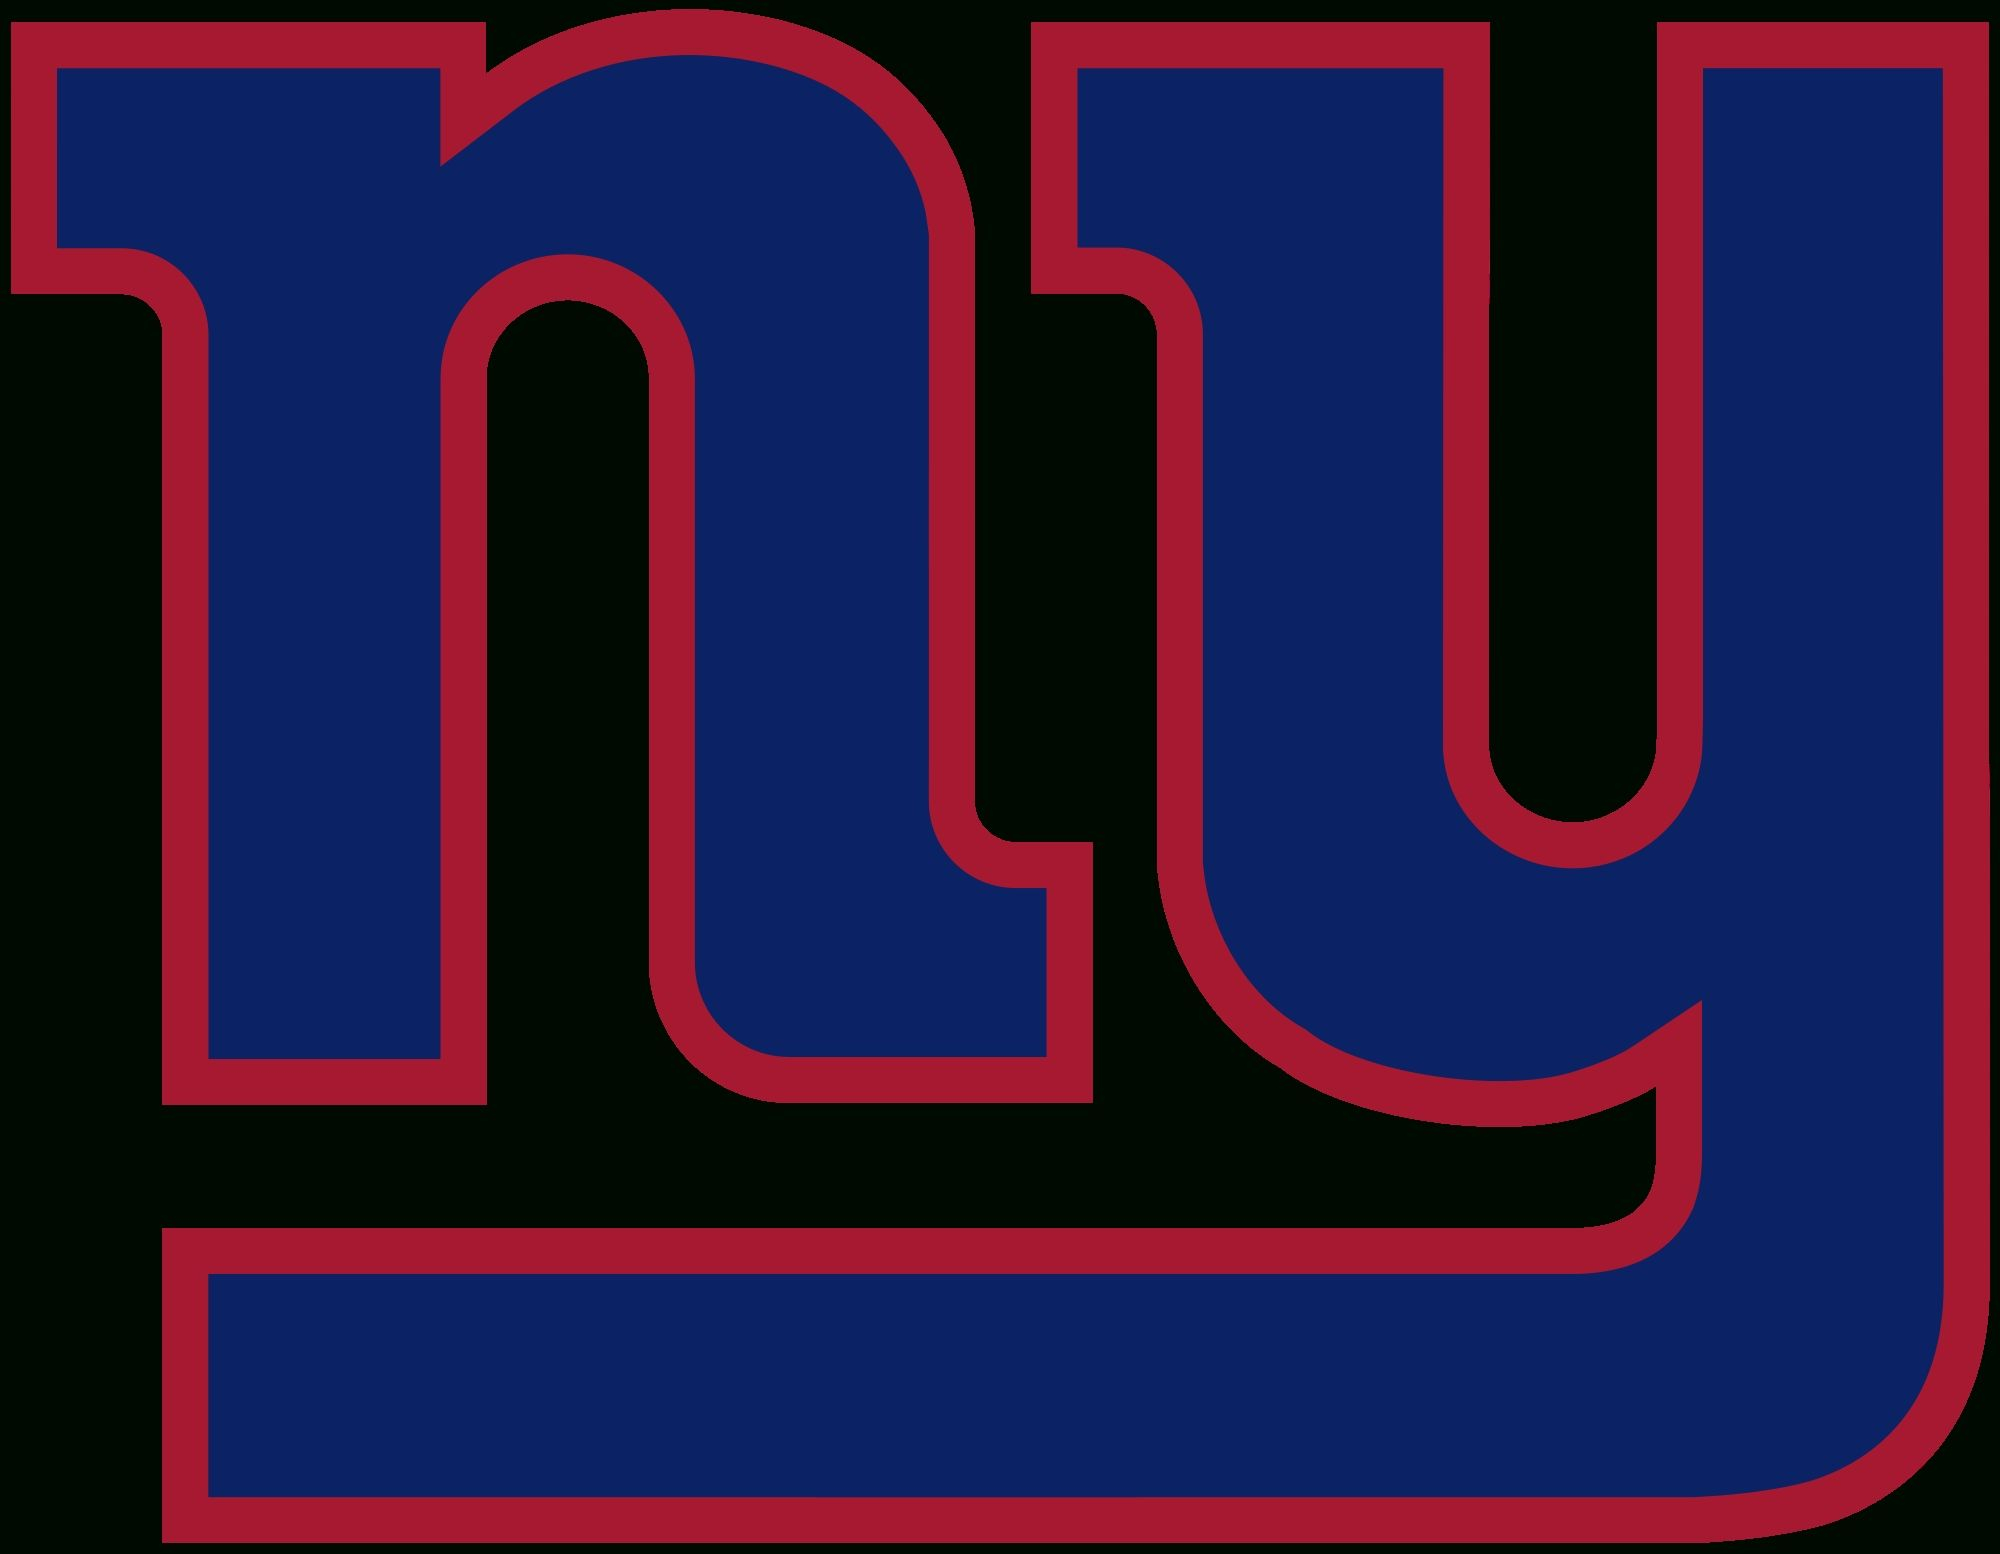 2000x1554 10 Top New York Giants Logo Pics FULL HD 1080p For PC Background | New york giants logo, New york giants, New york football